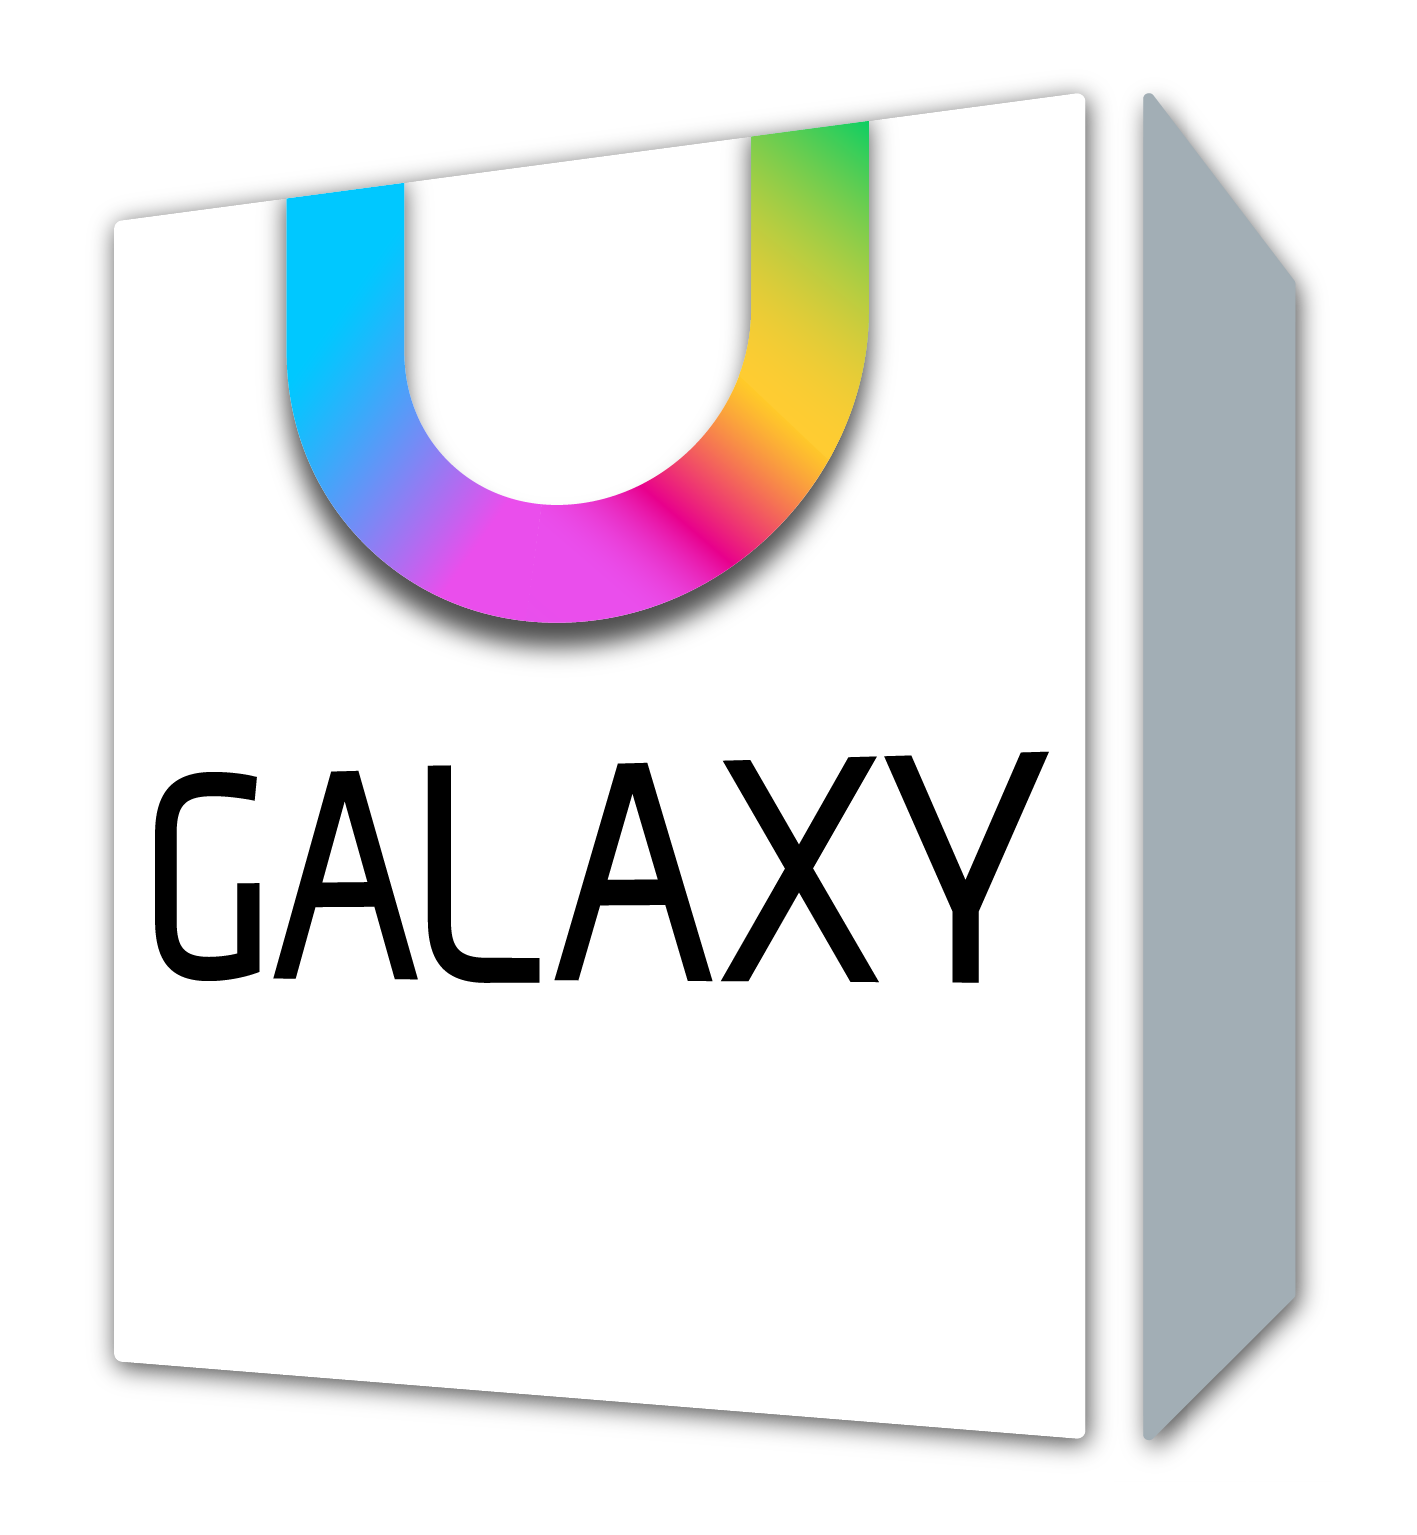 Samsung GALAXY Apps